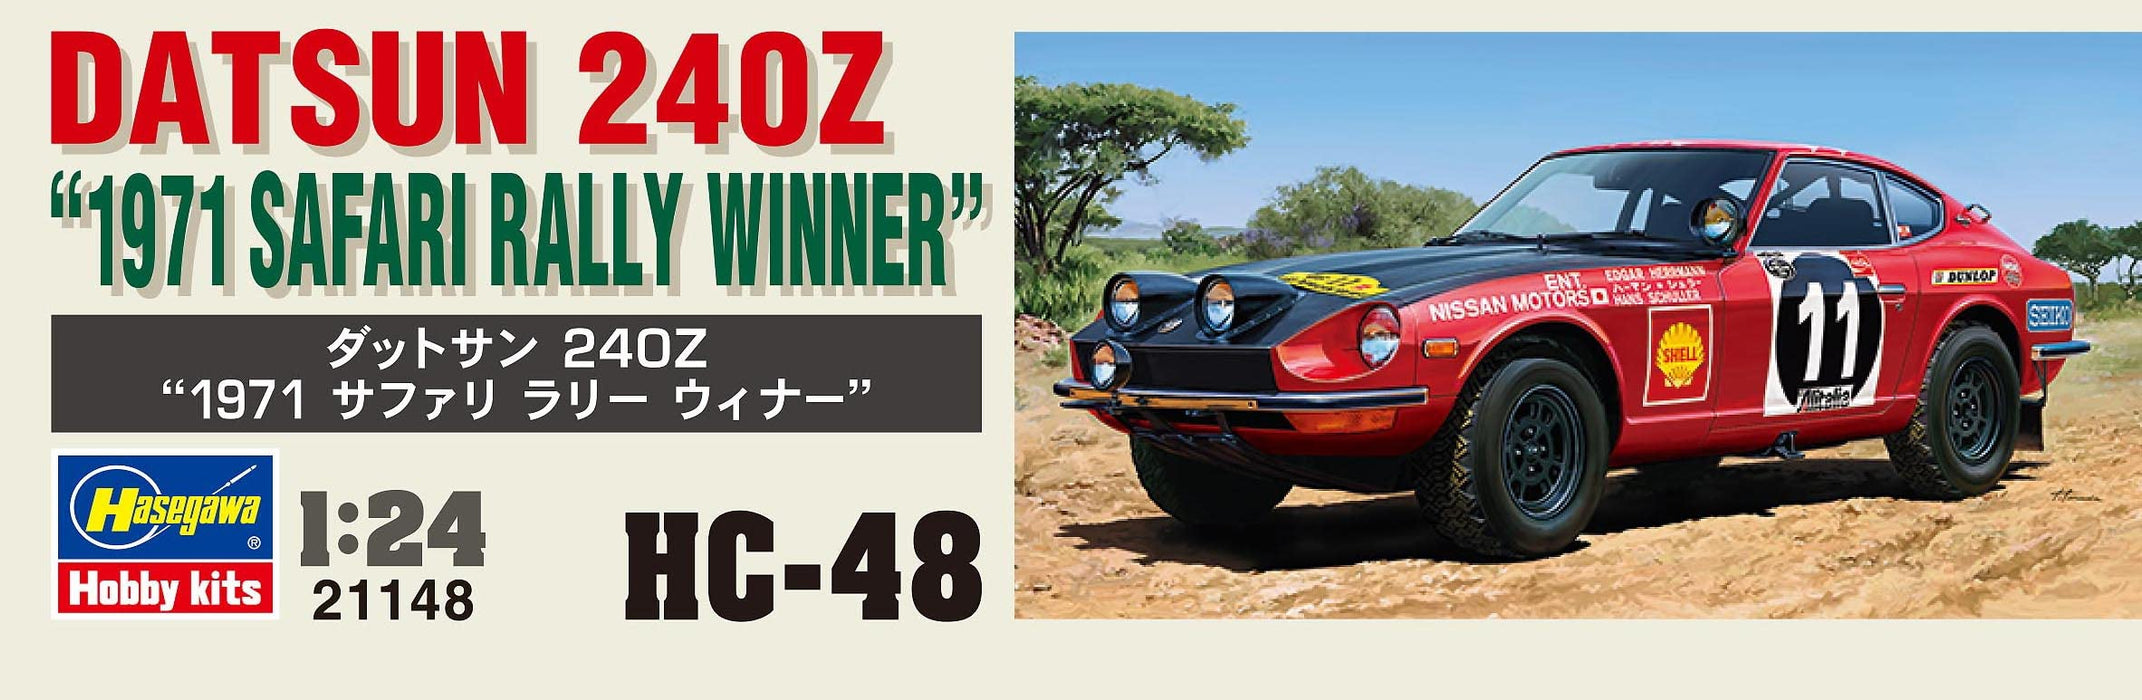 Hasegawa 1/24 DATSUN FAIRLADY 240Z 1971 SAFARI RALLY WINNER Model Kit HC48 NEW_4